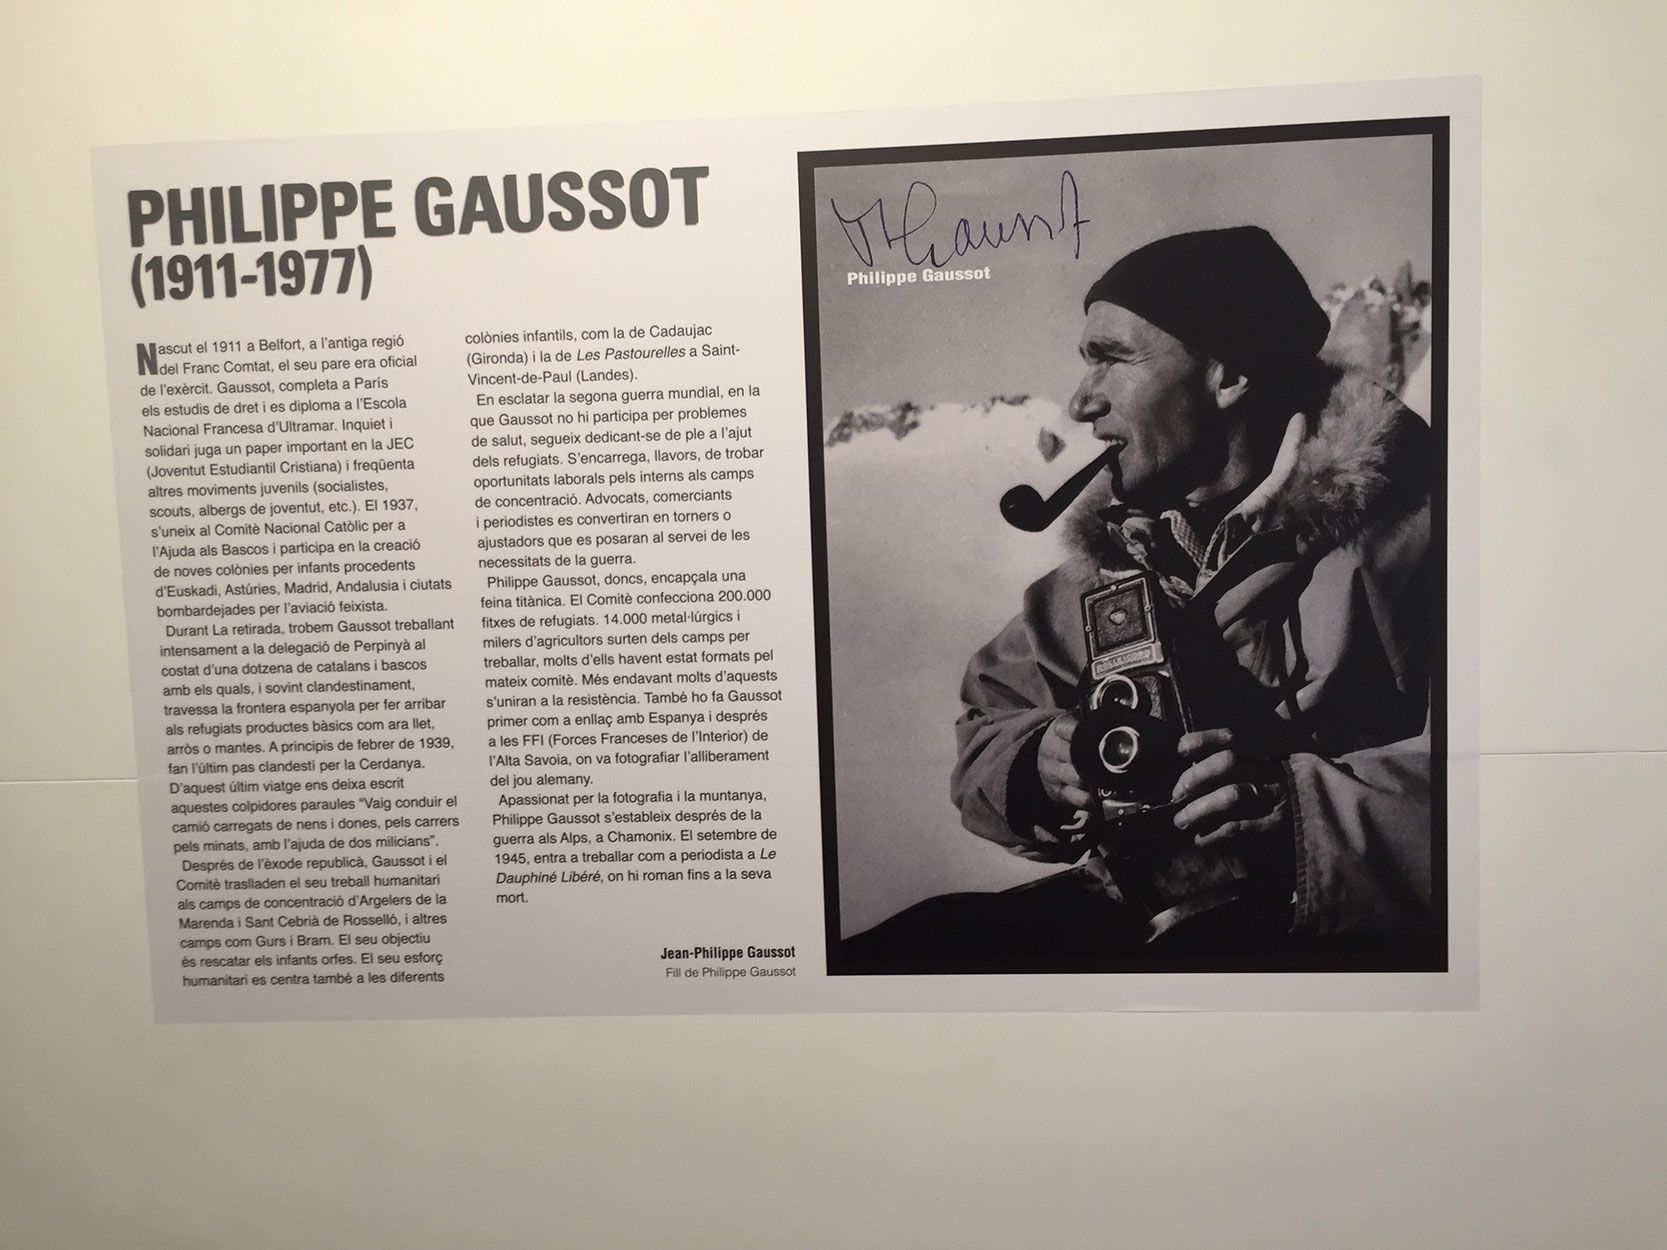 Bio Philippe Gaussot